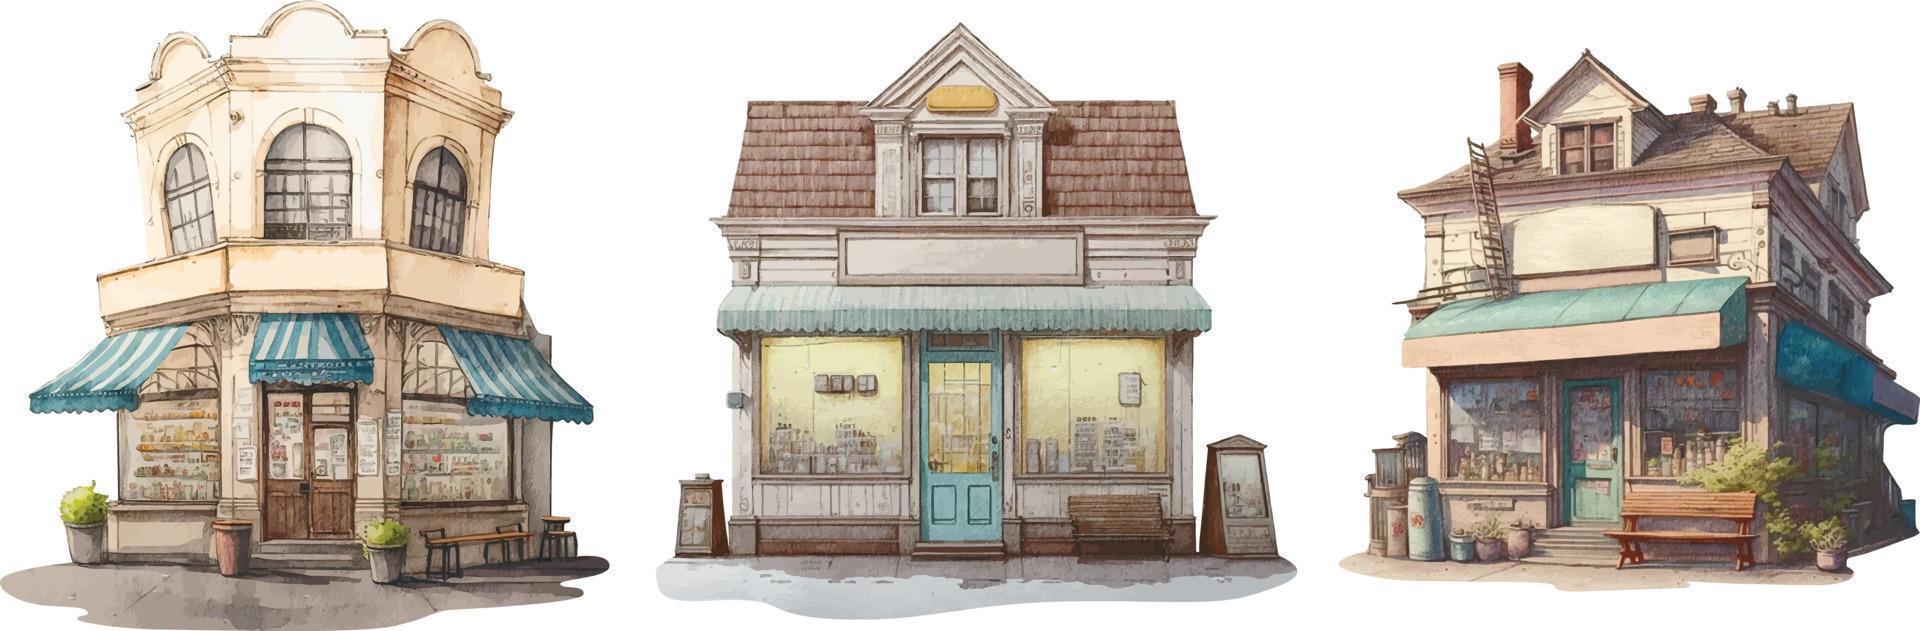 Store Front Café Restaurant Aquarellmalerei Illustration vektor